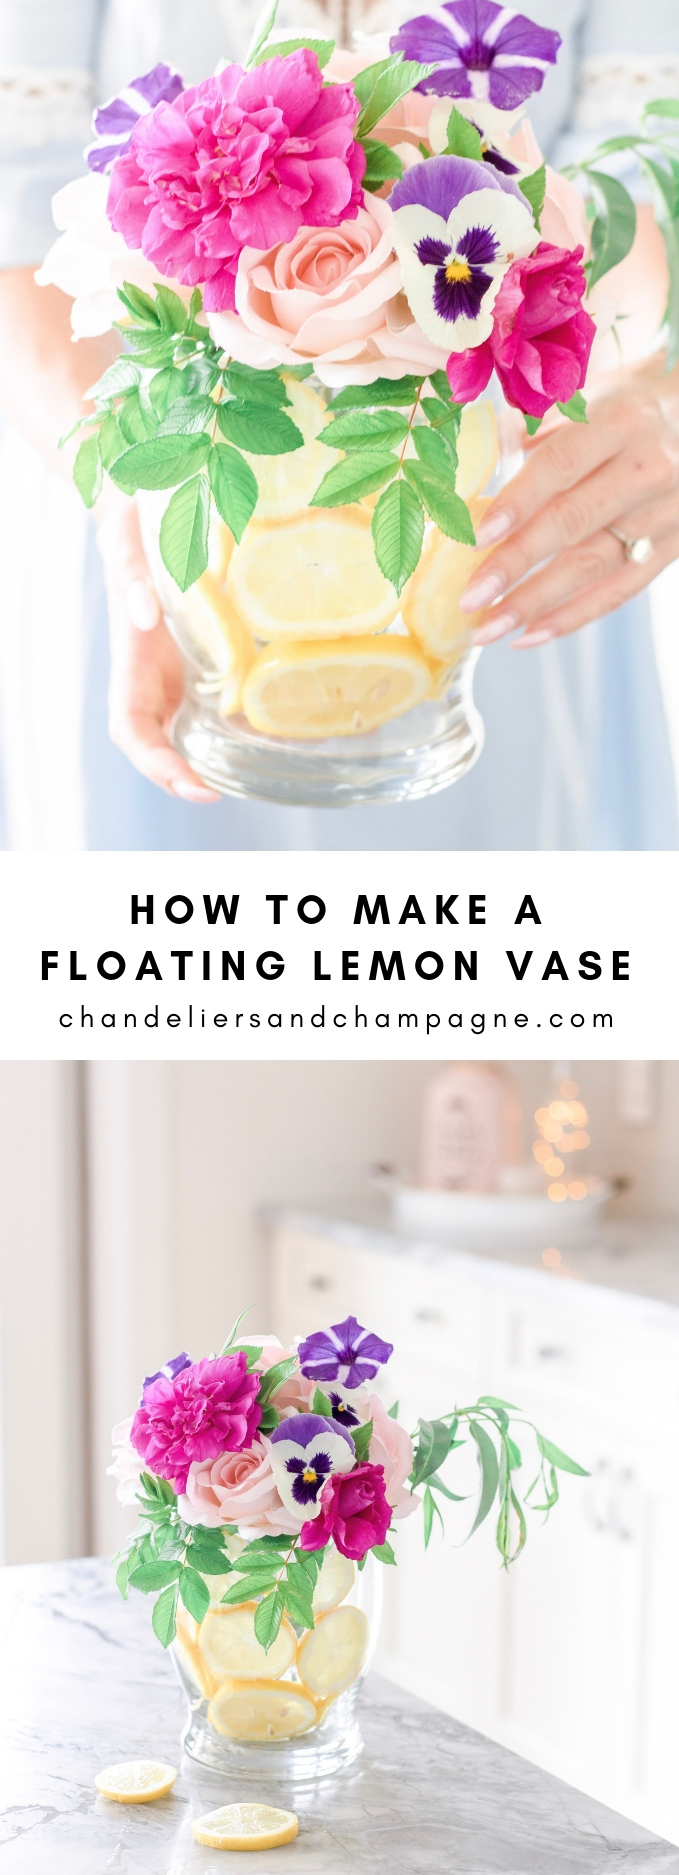 How to make a floating lemon vase - creating a floating citrus centrepiece